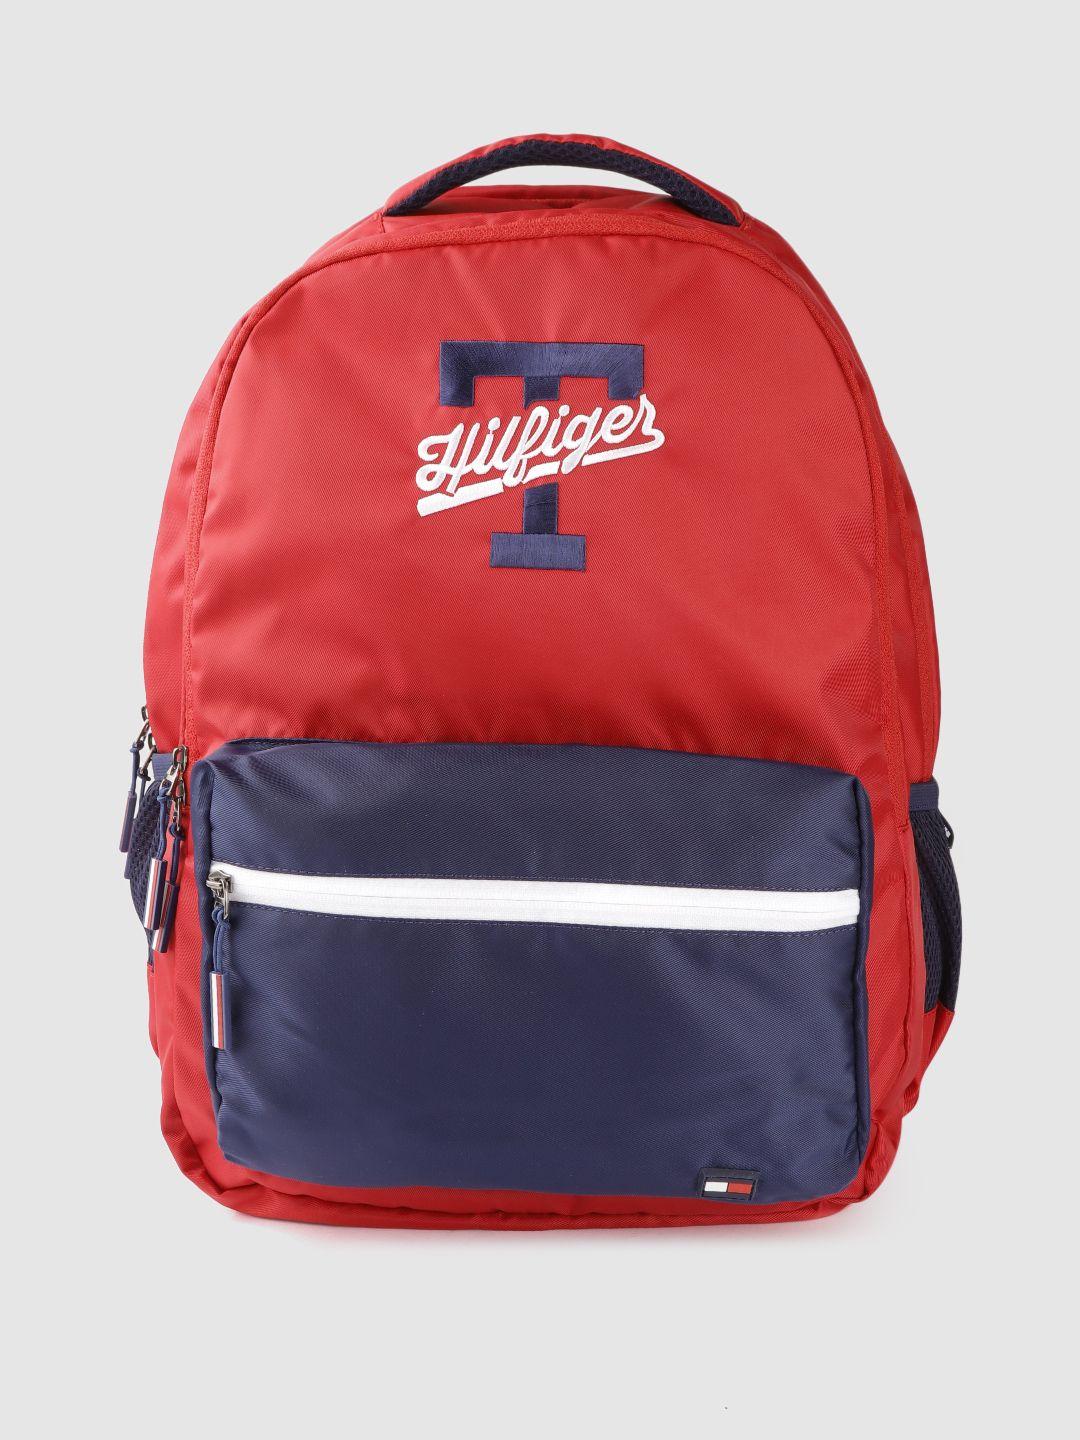 tommy hilfiger unisex red & navy blue brand logo embroidered backpack